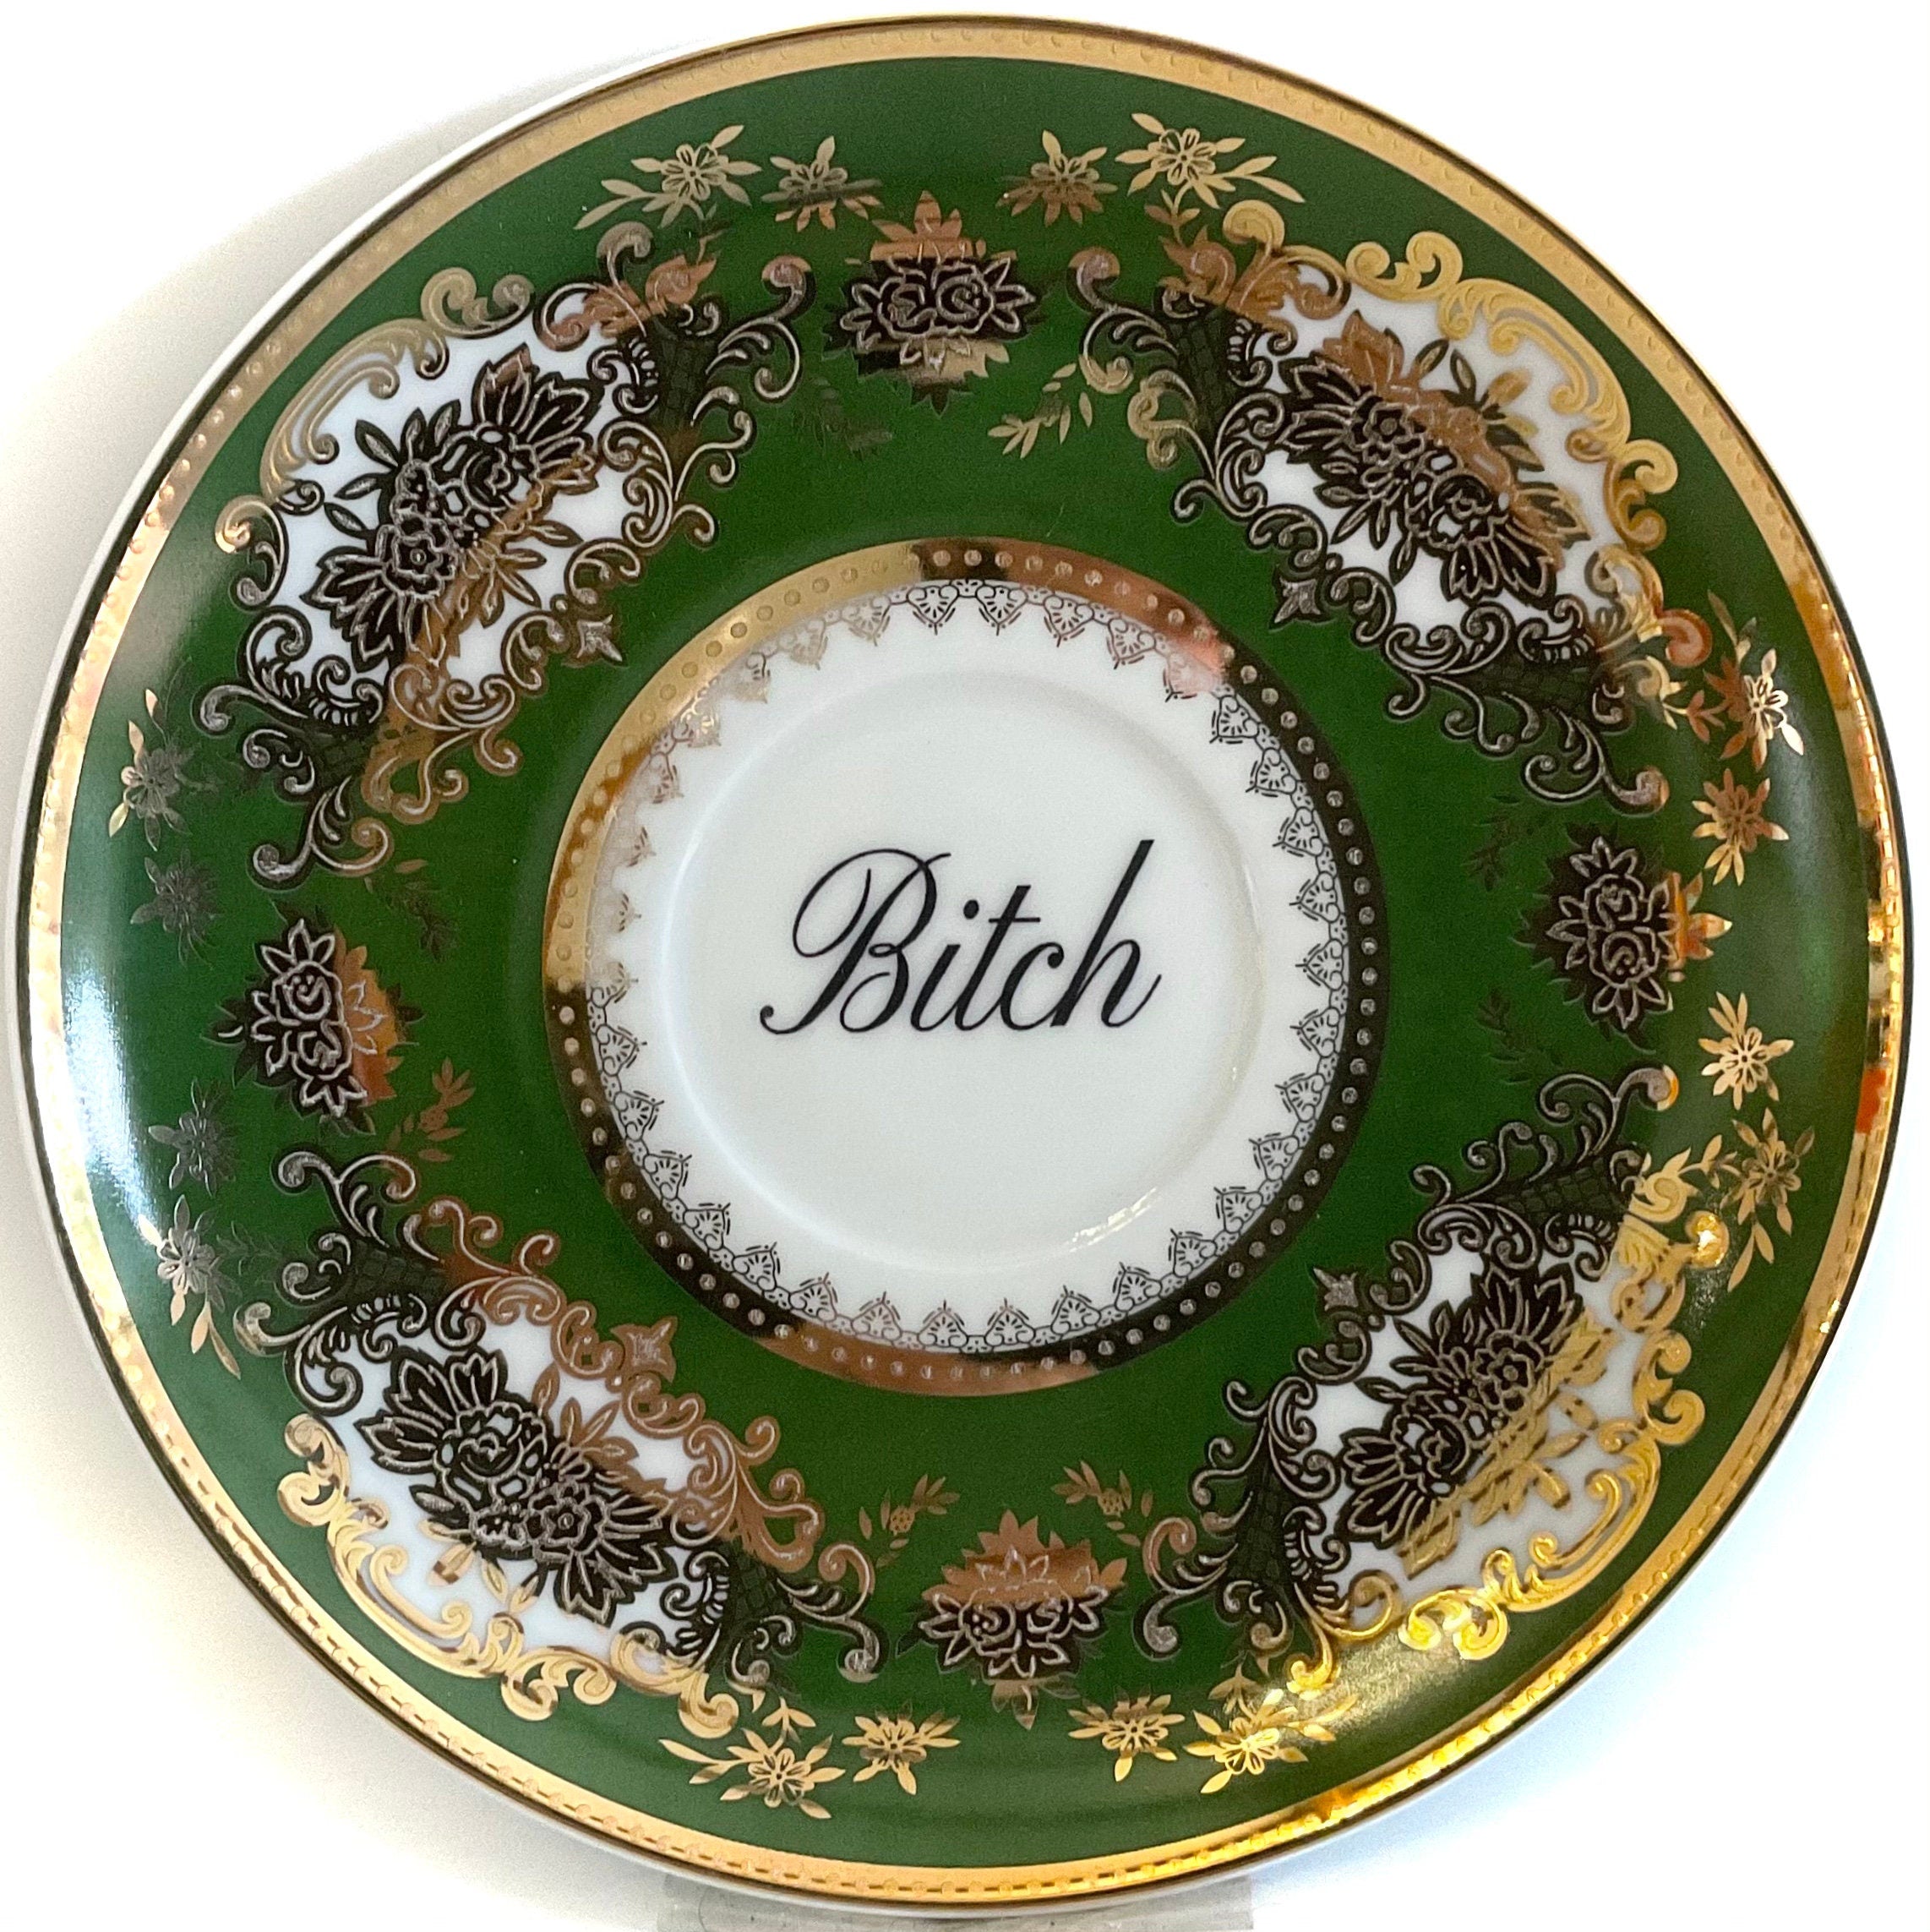 You have been Poisoned” Teacup & Saucer Set, 8 oz, Porcelain – Angioletti  Designs